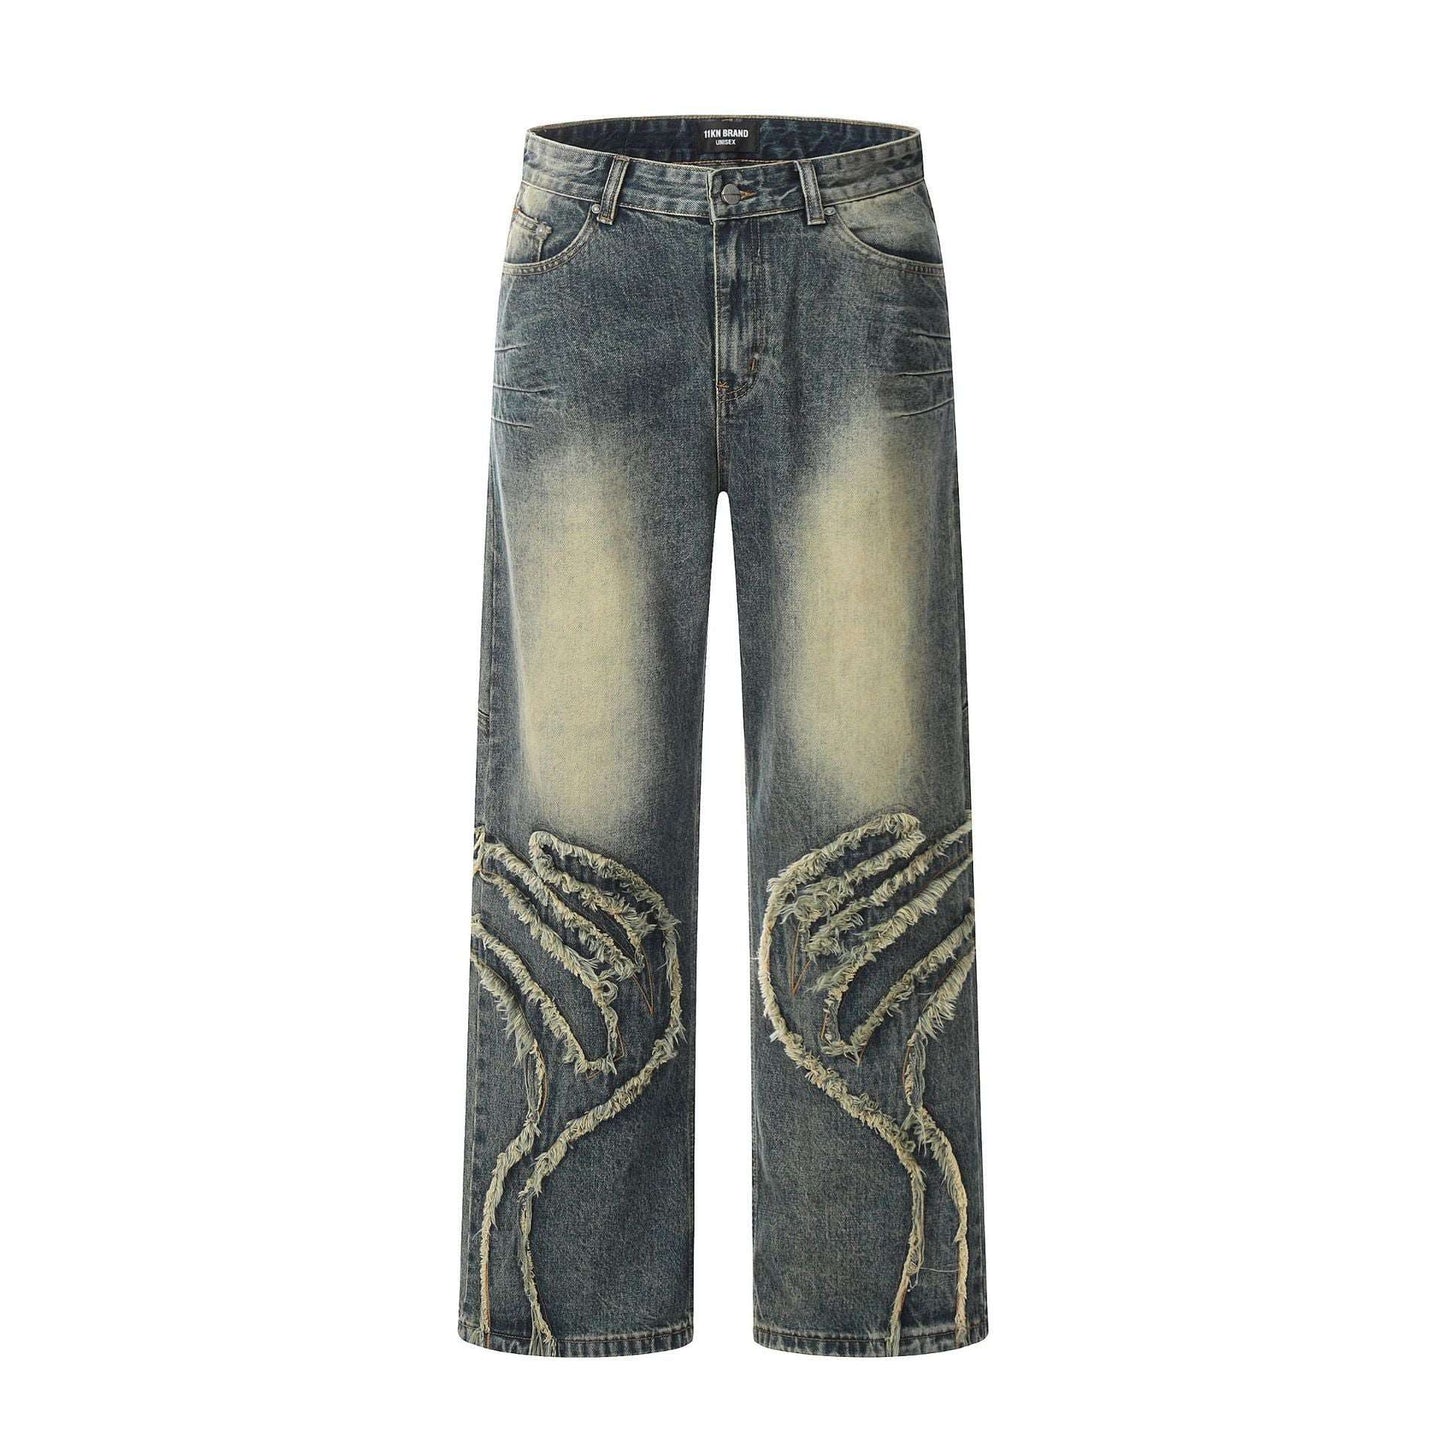 American Men's Straight Retro Jeans apparels & accessories